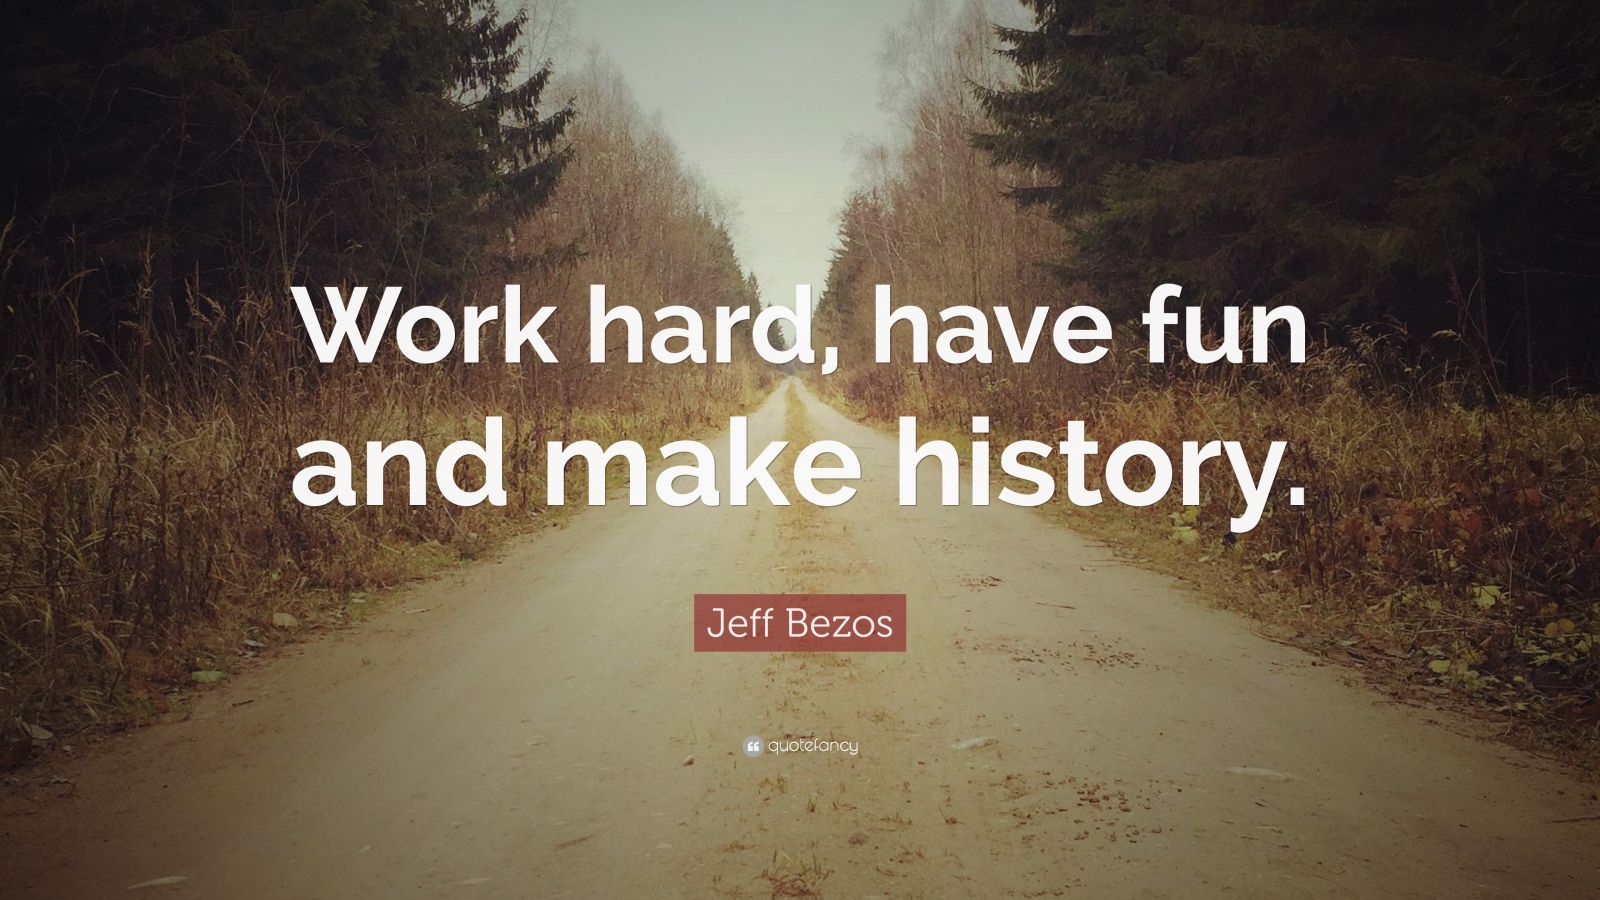 Jeff Bezos Quote: “Work hard, have fun and make history.” (30